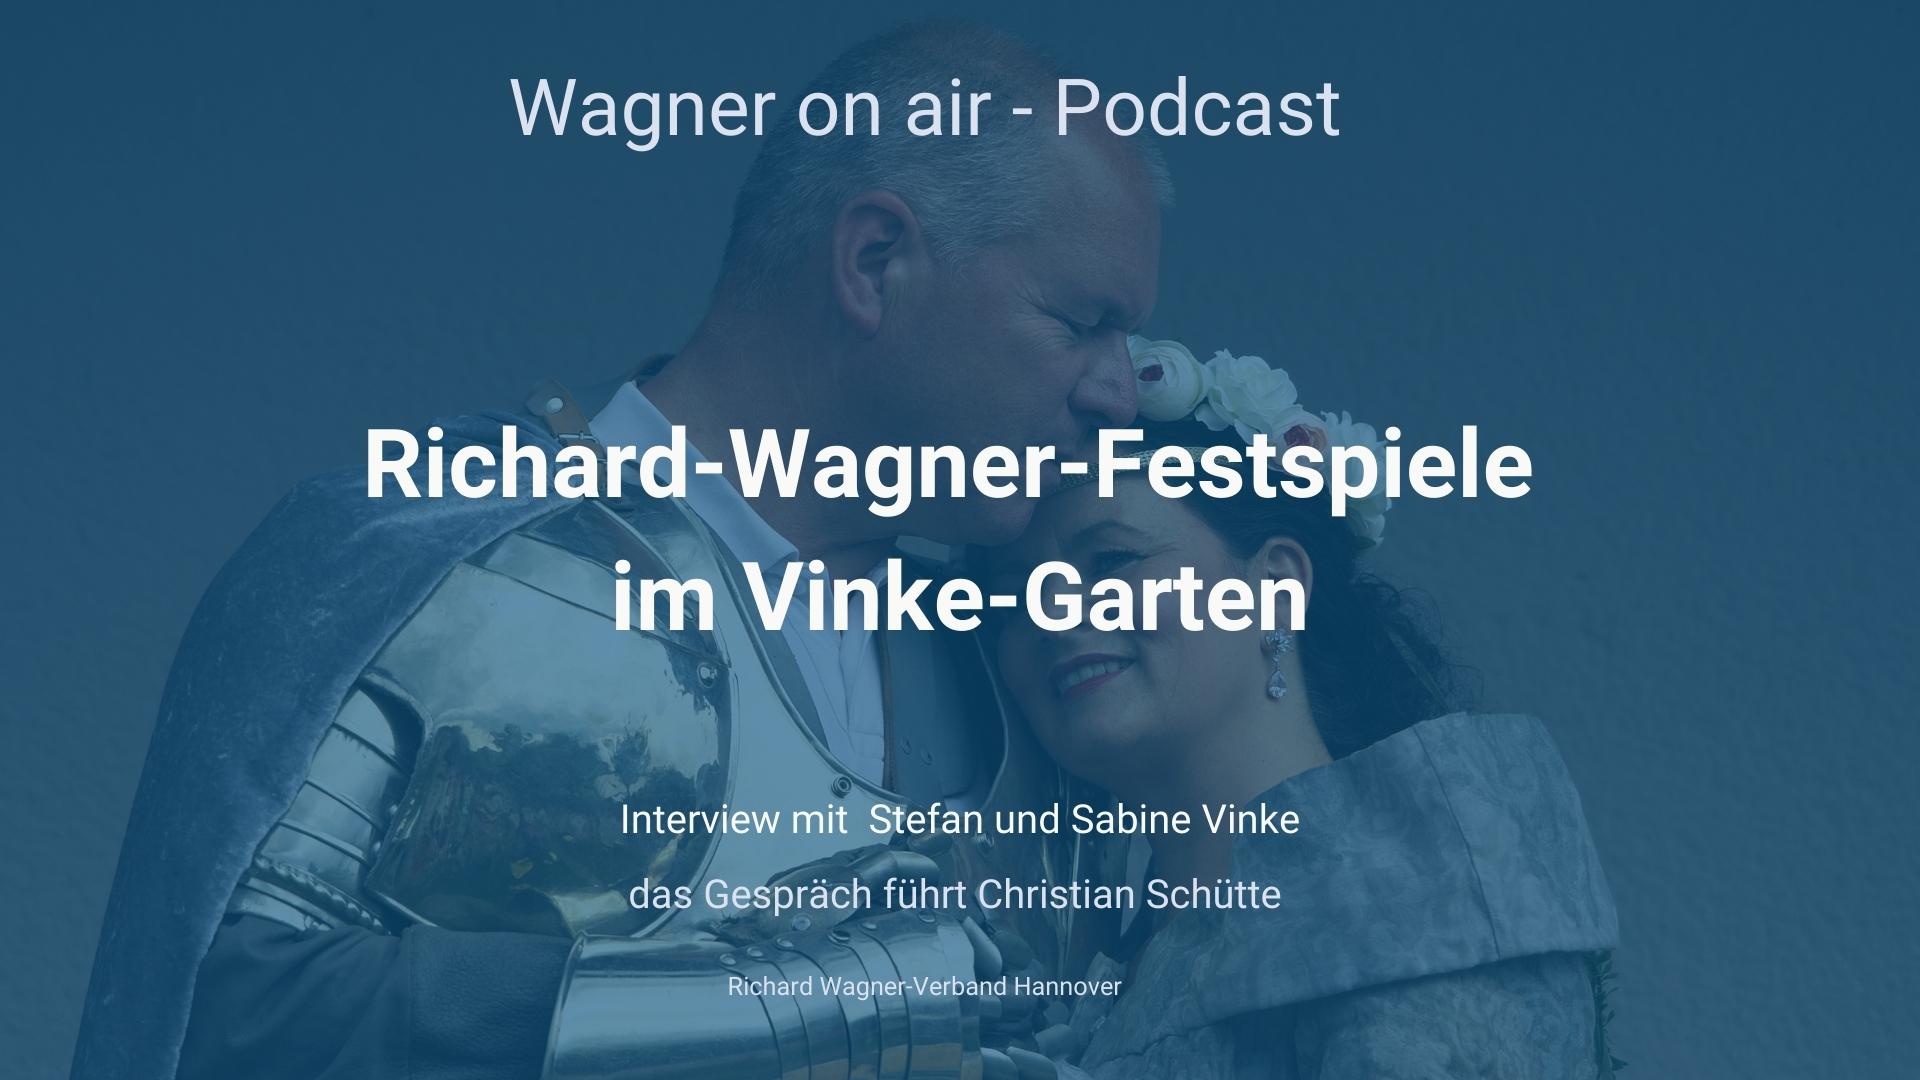 Richard-Wagner-Festspiele im Vinke-Garten